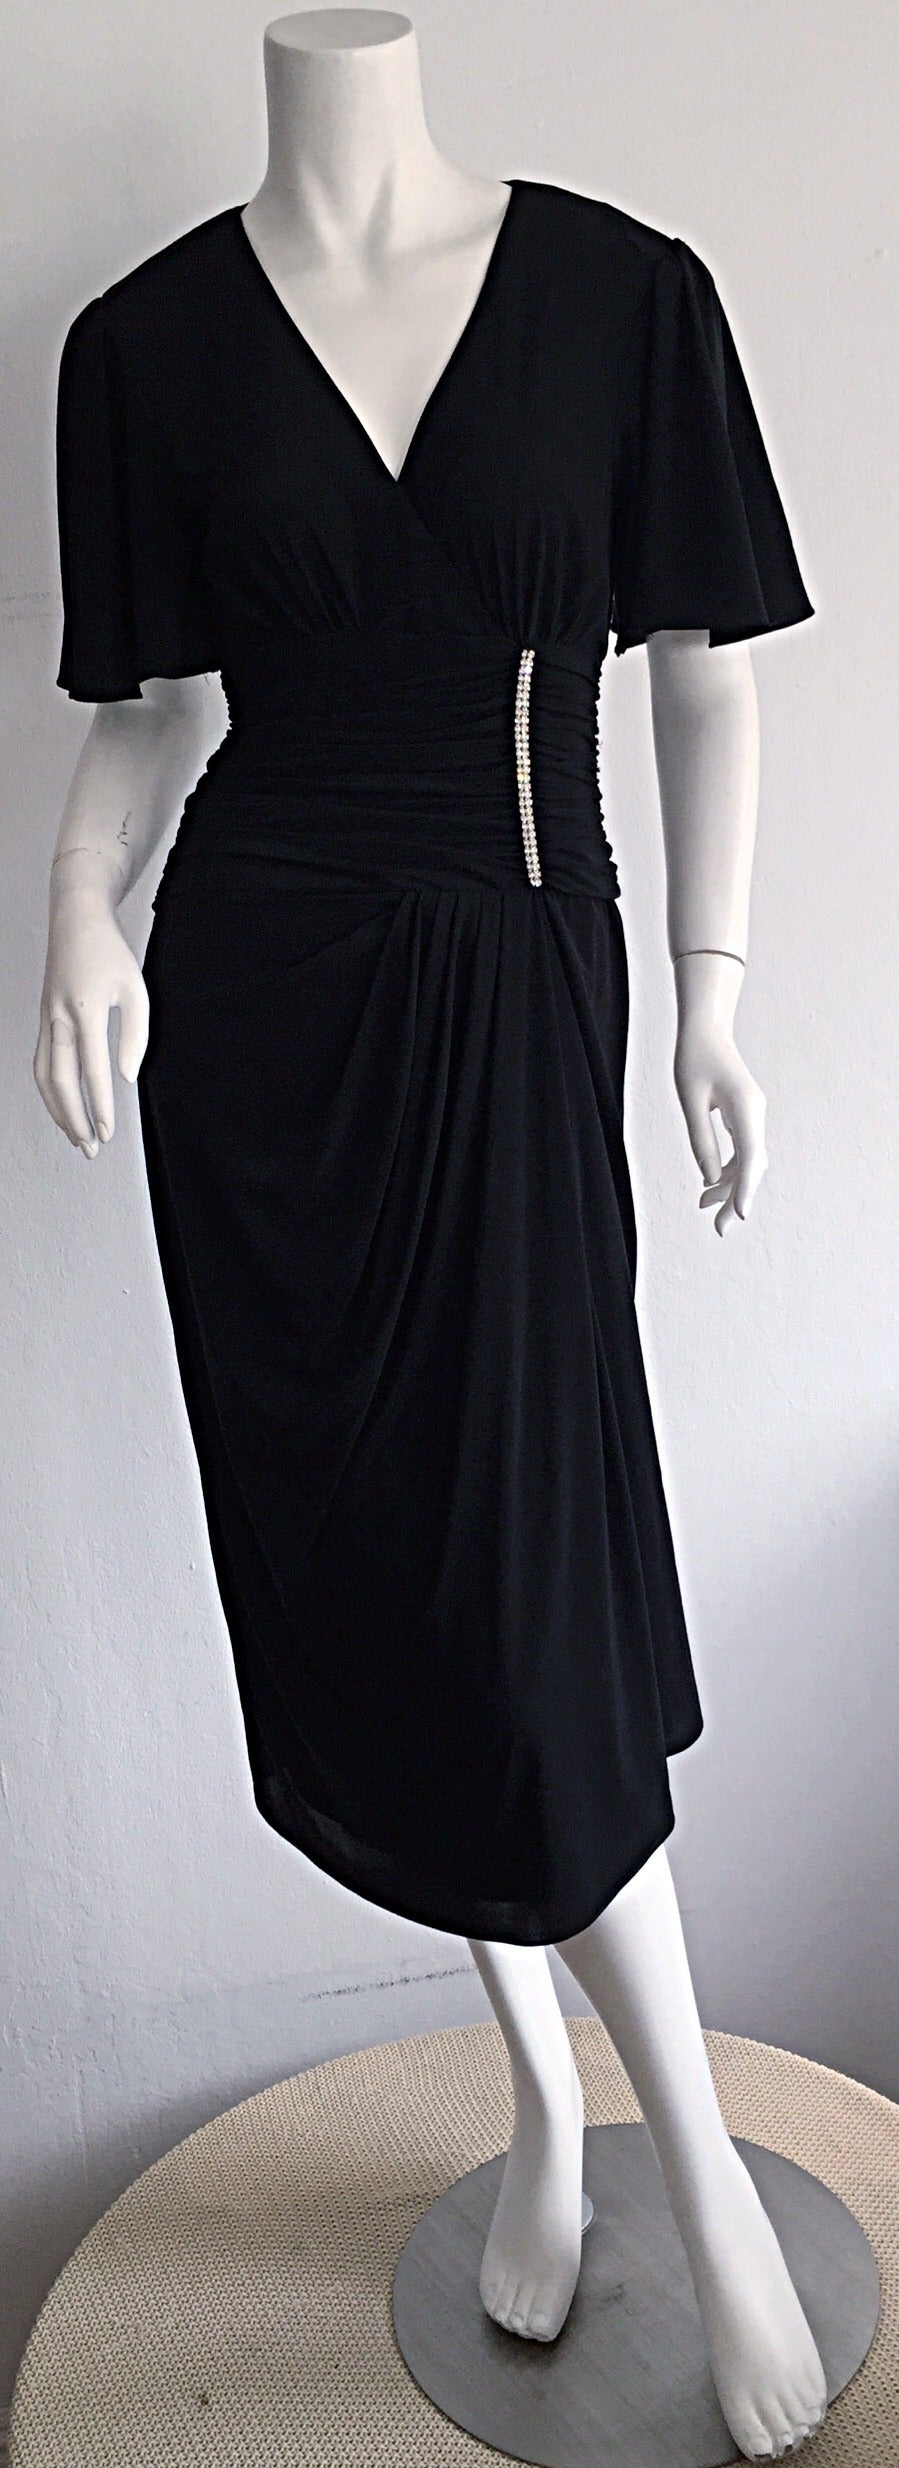 Gorgeous Vintage Neiman Marcus 1940s Style Classic Black Dress w/ Rhinestones For Sale 1